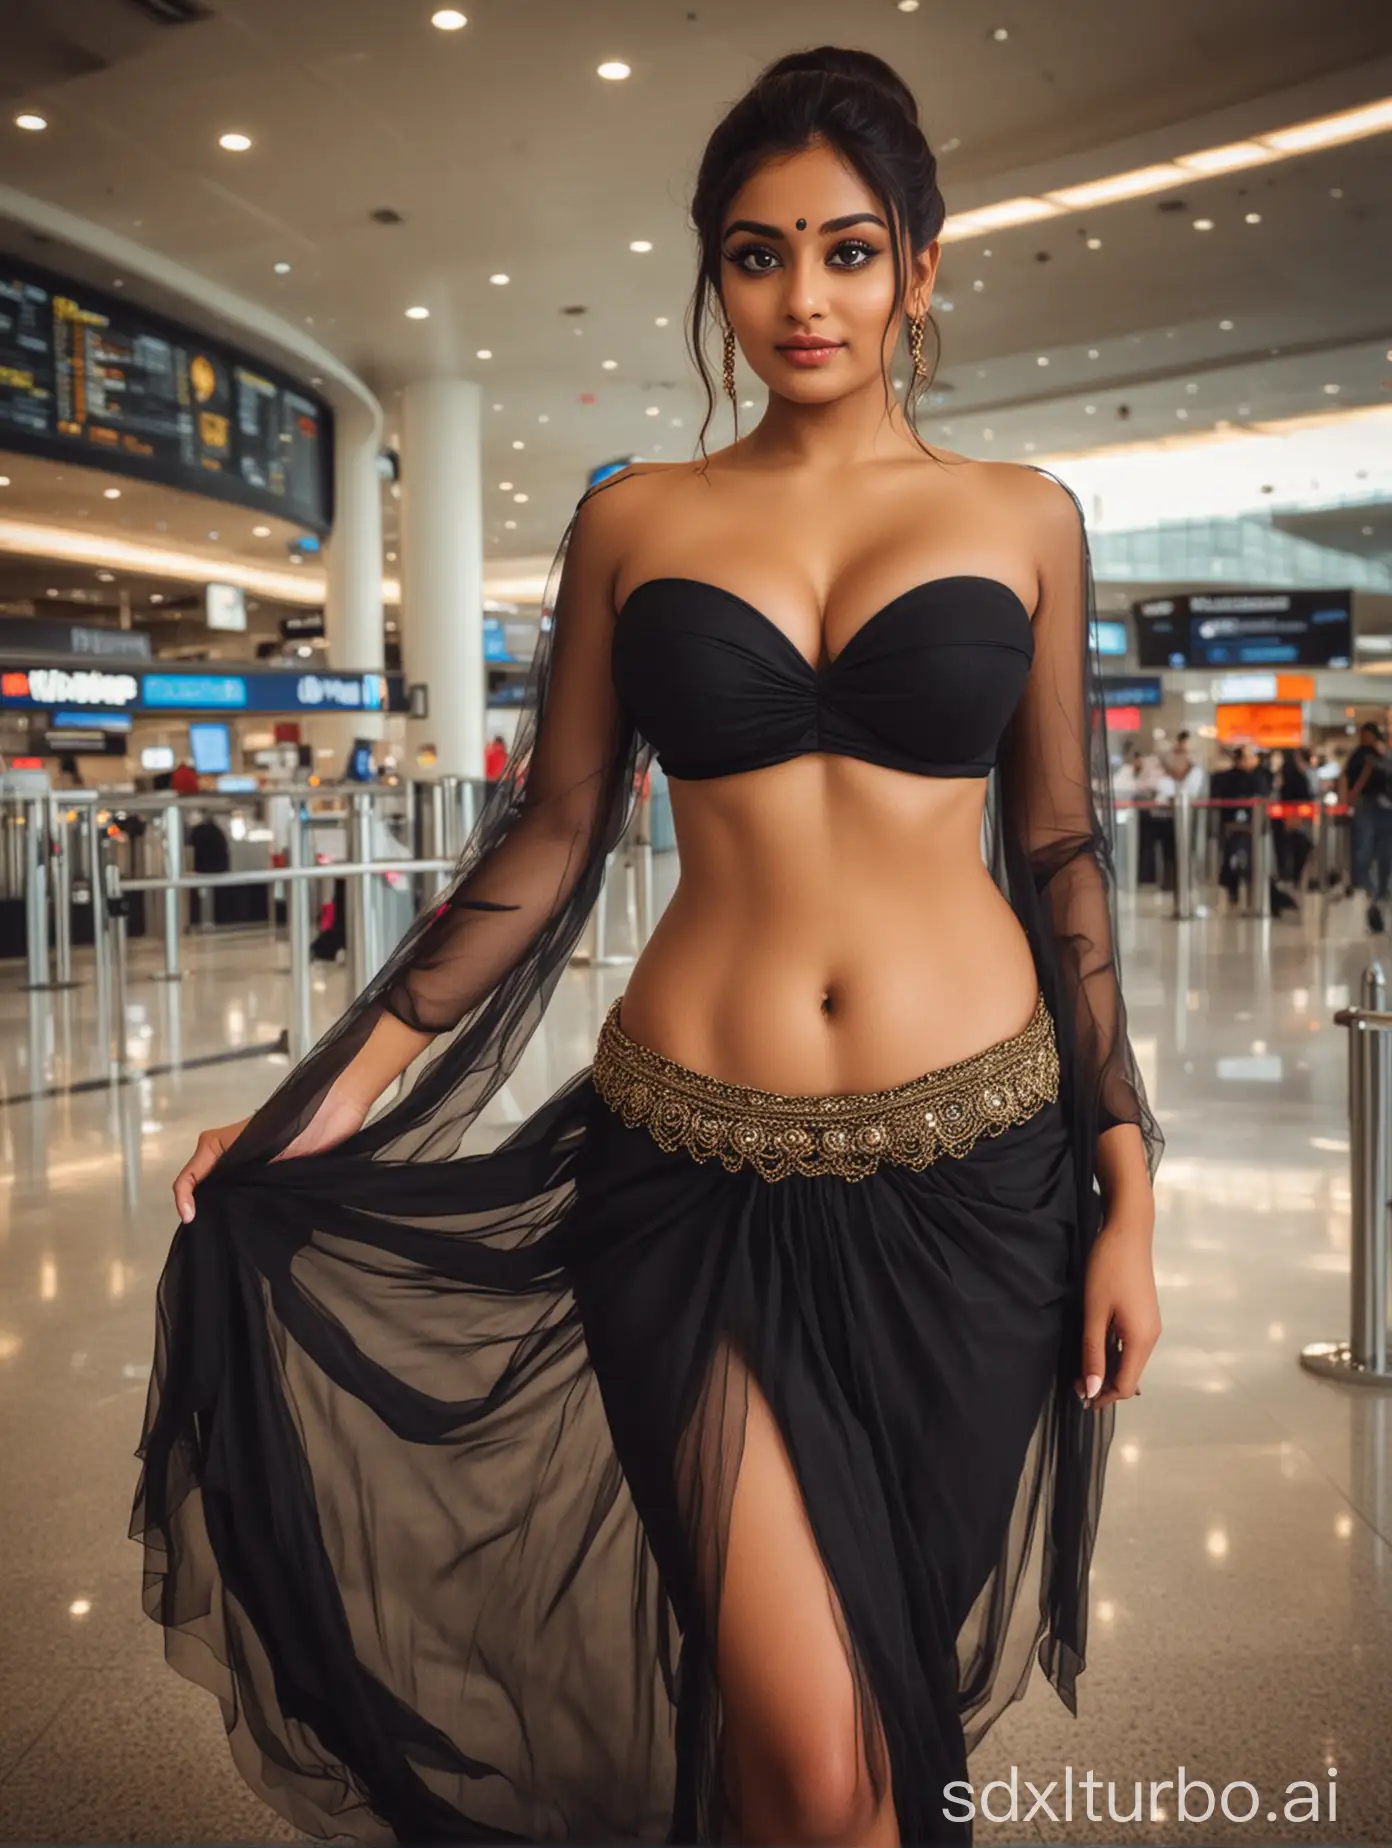 Voluptuous-Indian-Woman-in-Striking-Black-Lengha-Suit-at-Airport